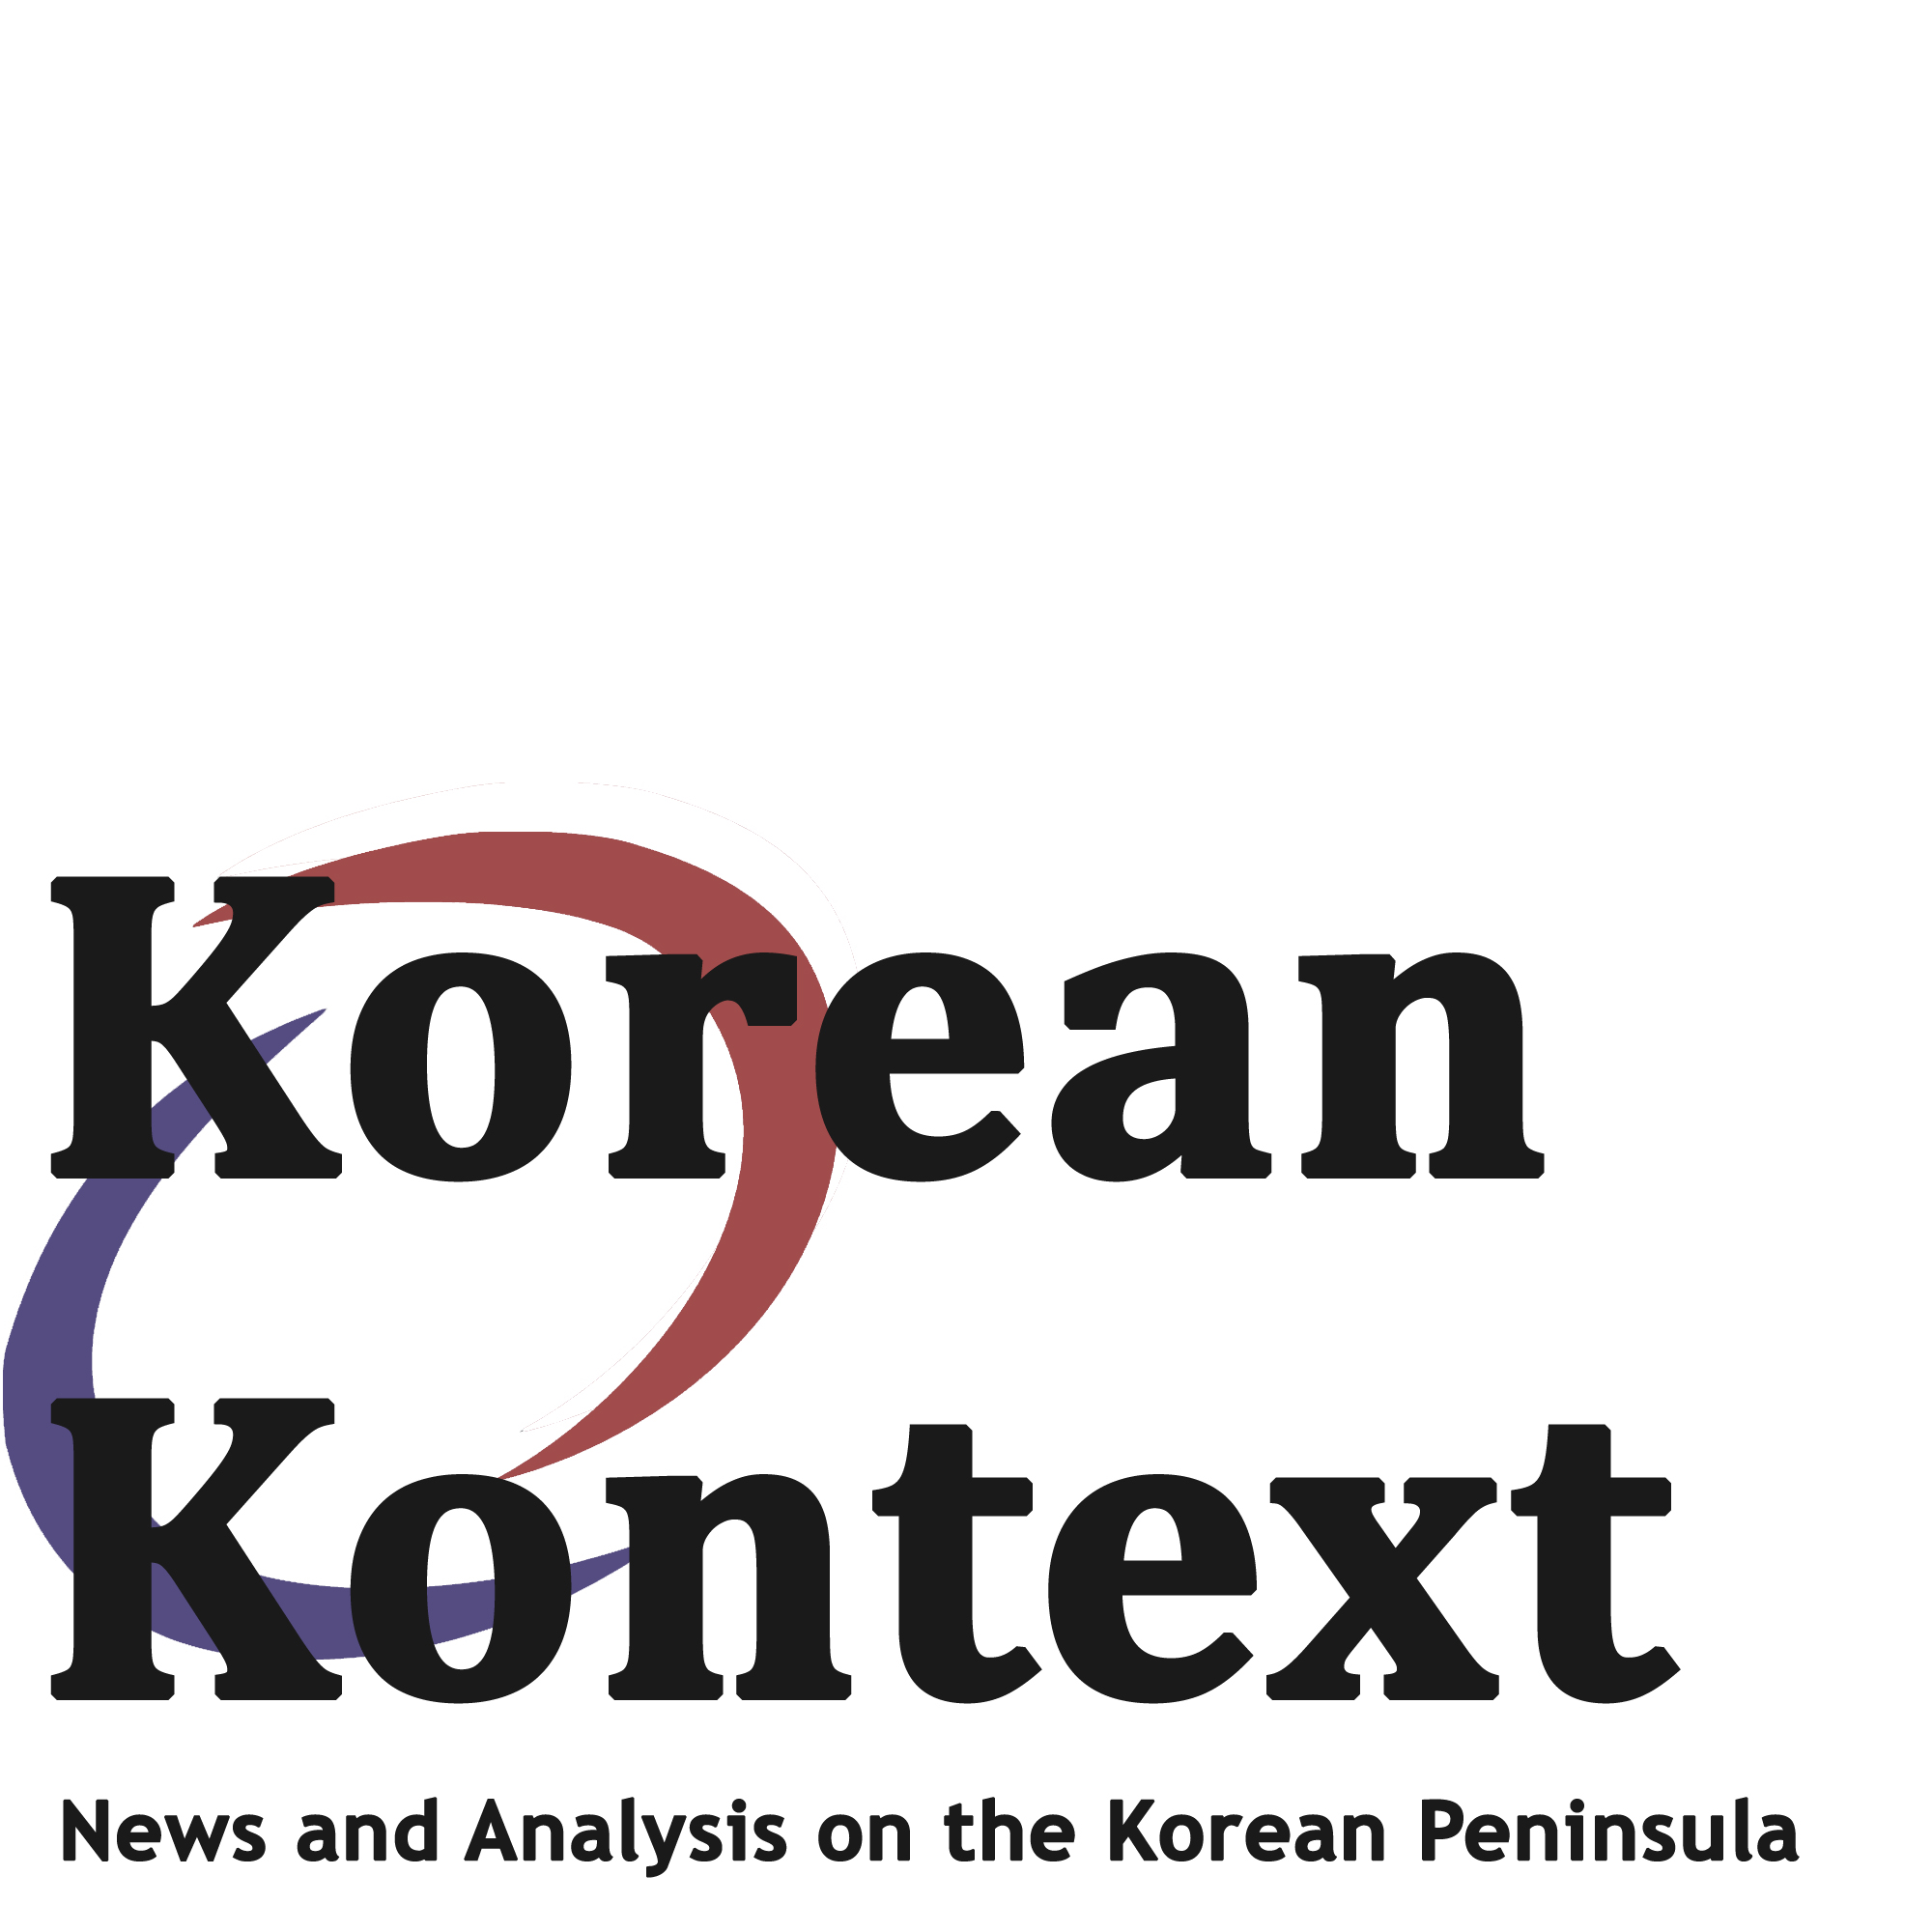 2017 on the Korean Peninsula